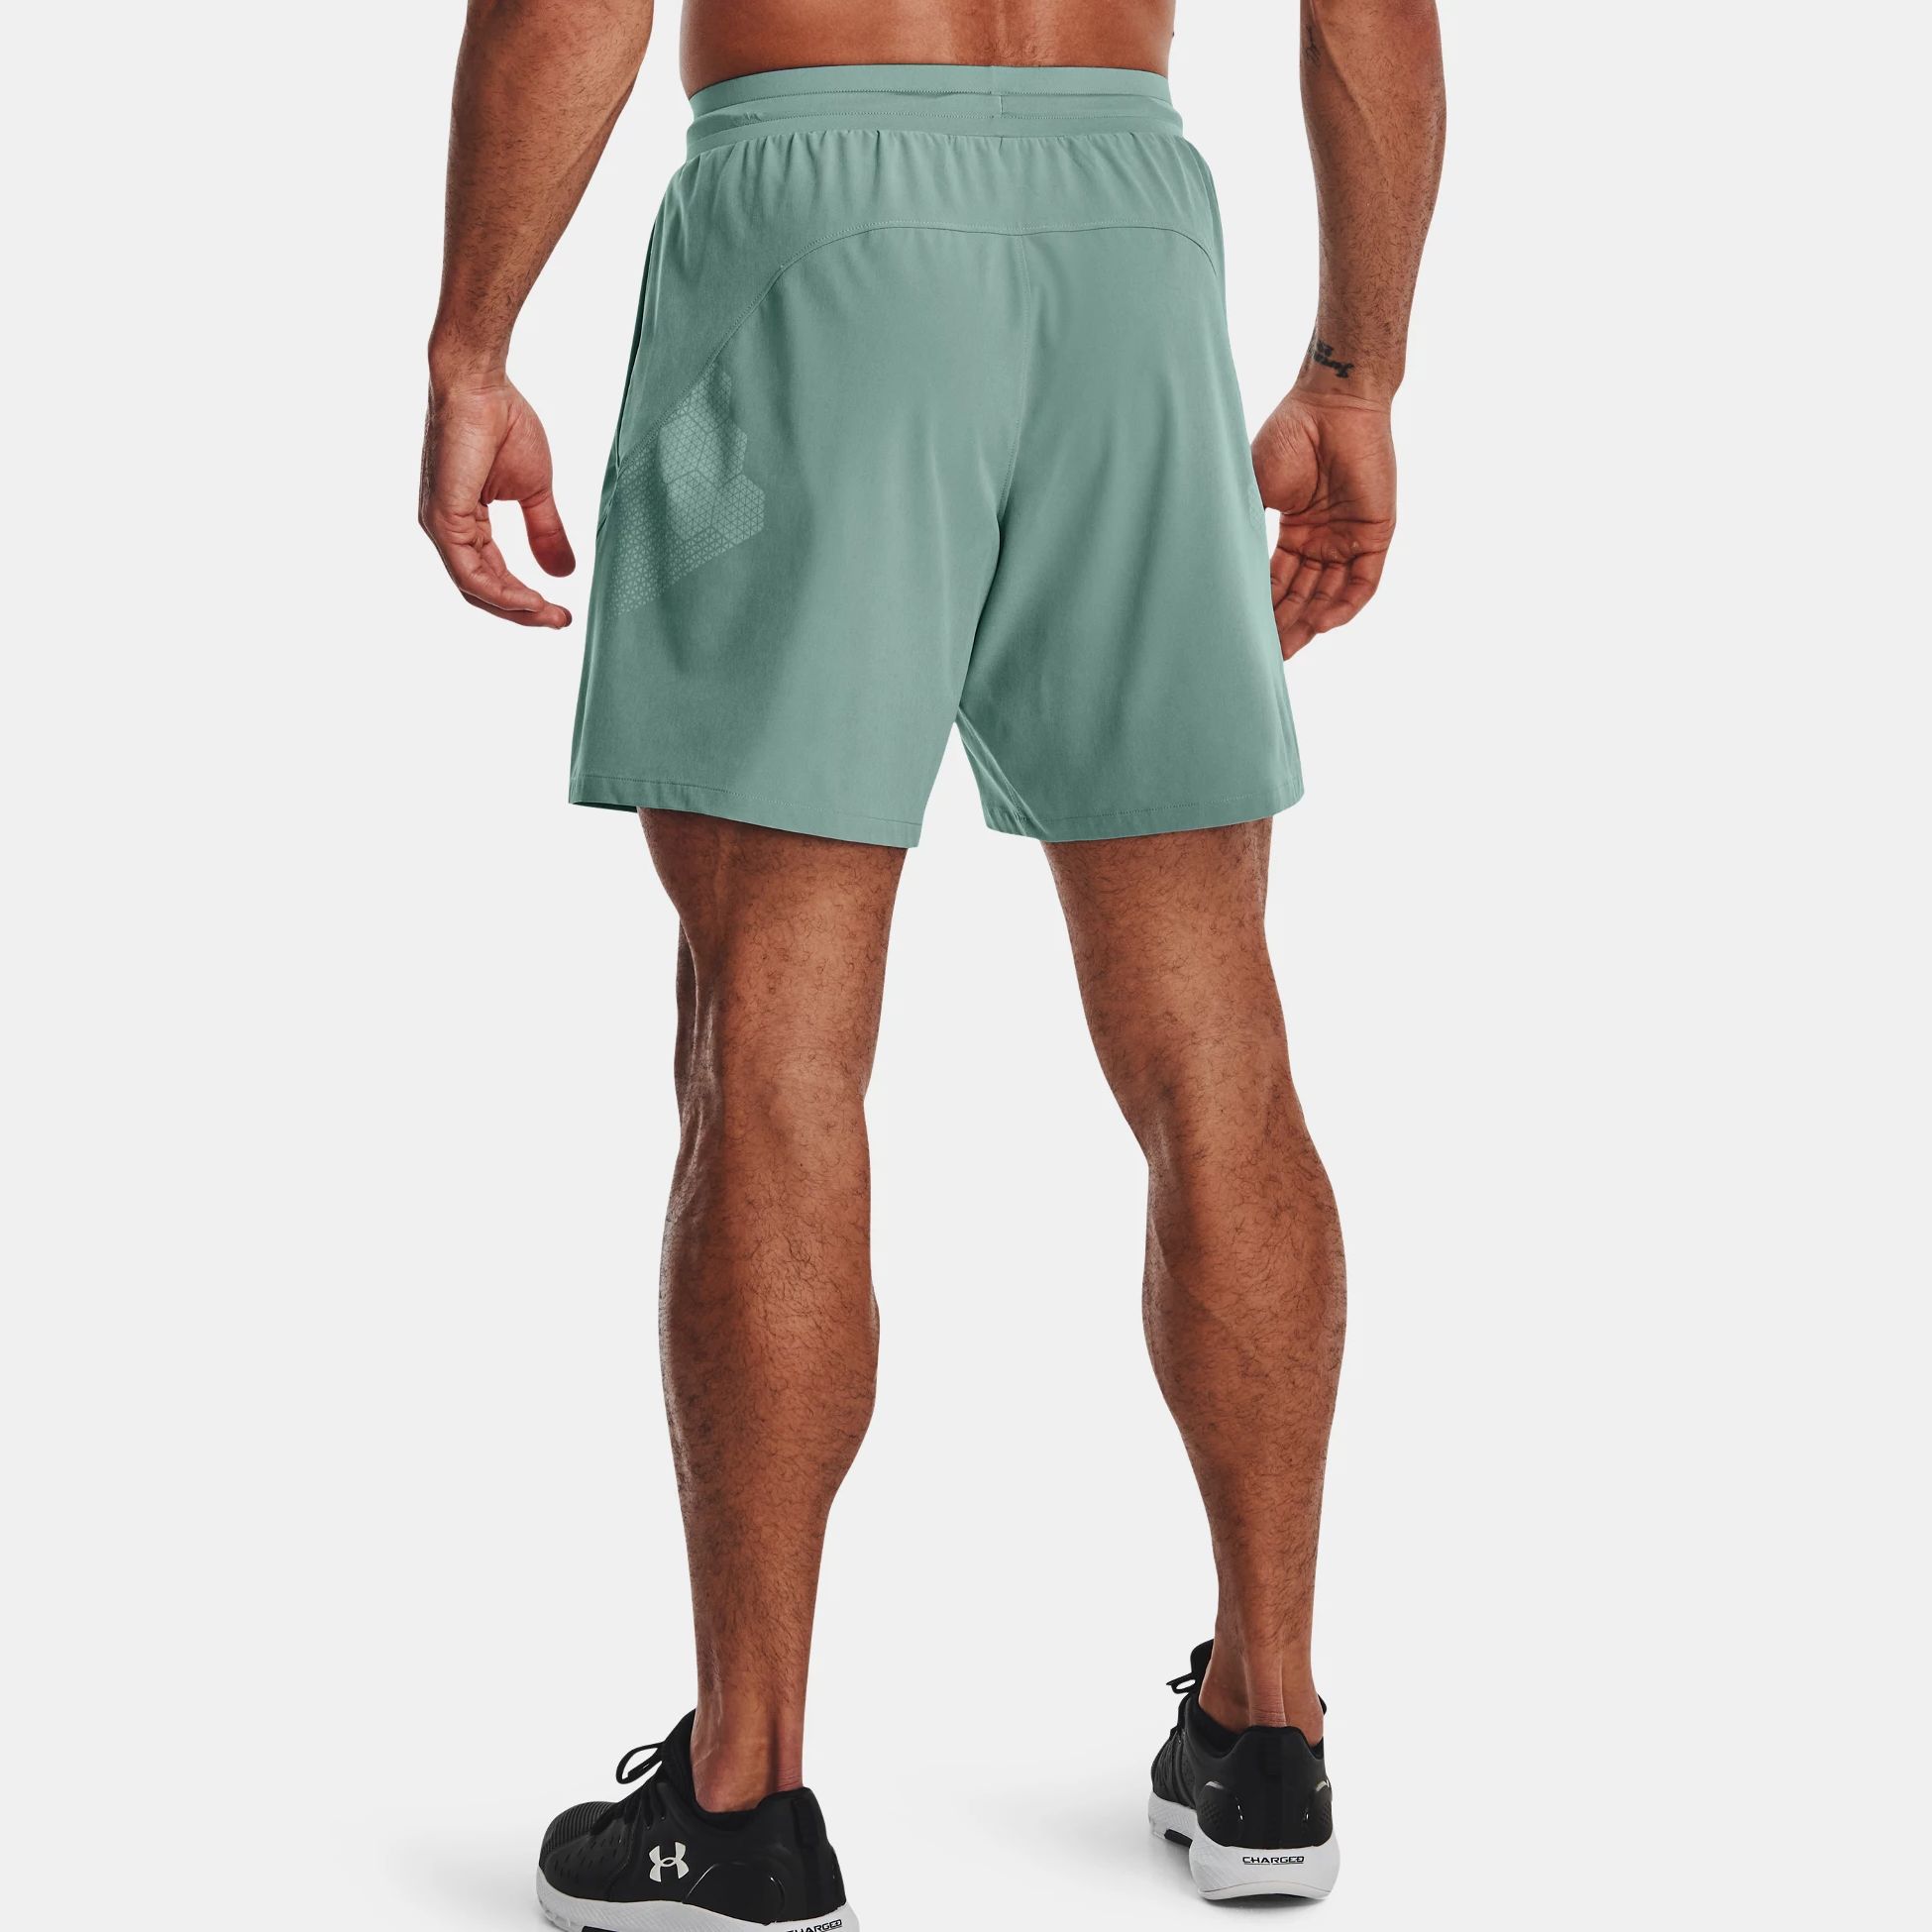 Shorts -  under armour UA ArmourPrint Woven Shorts